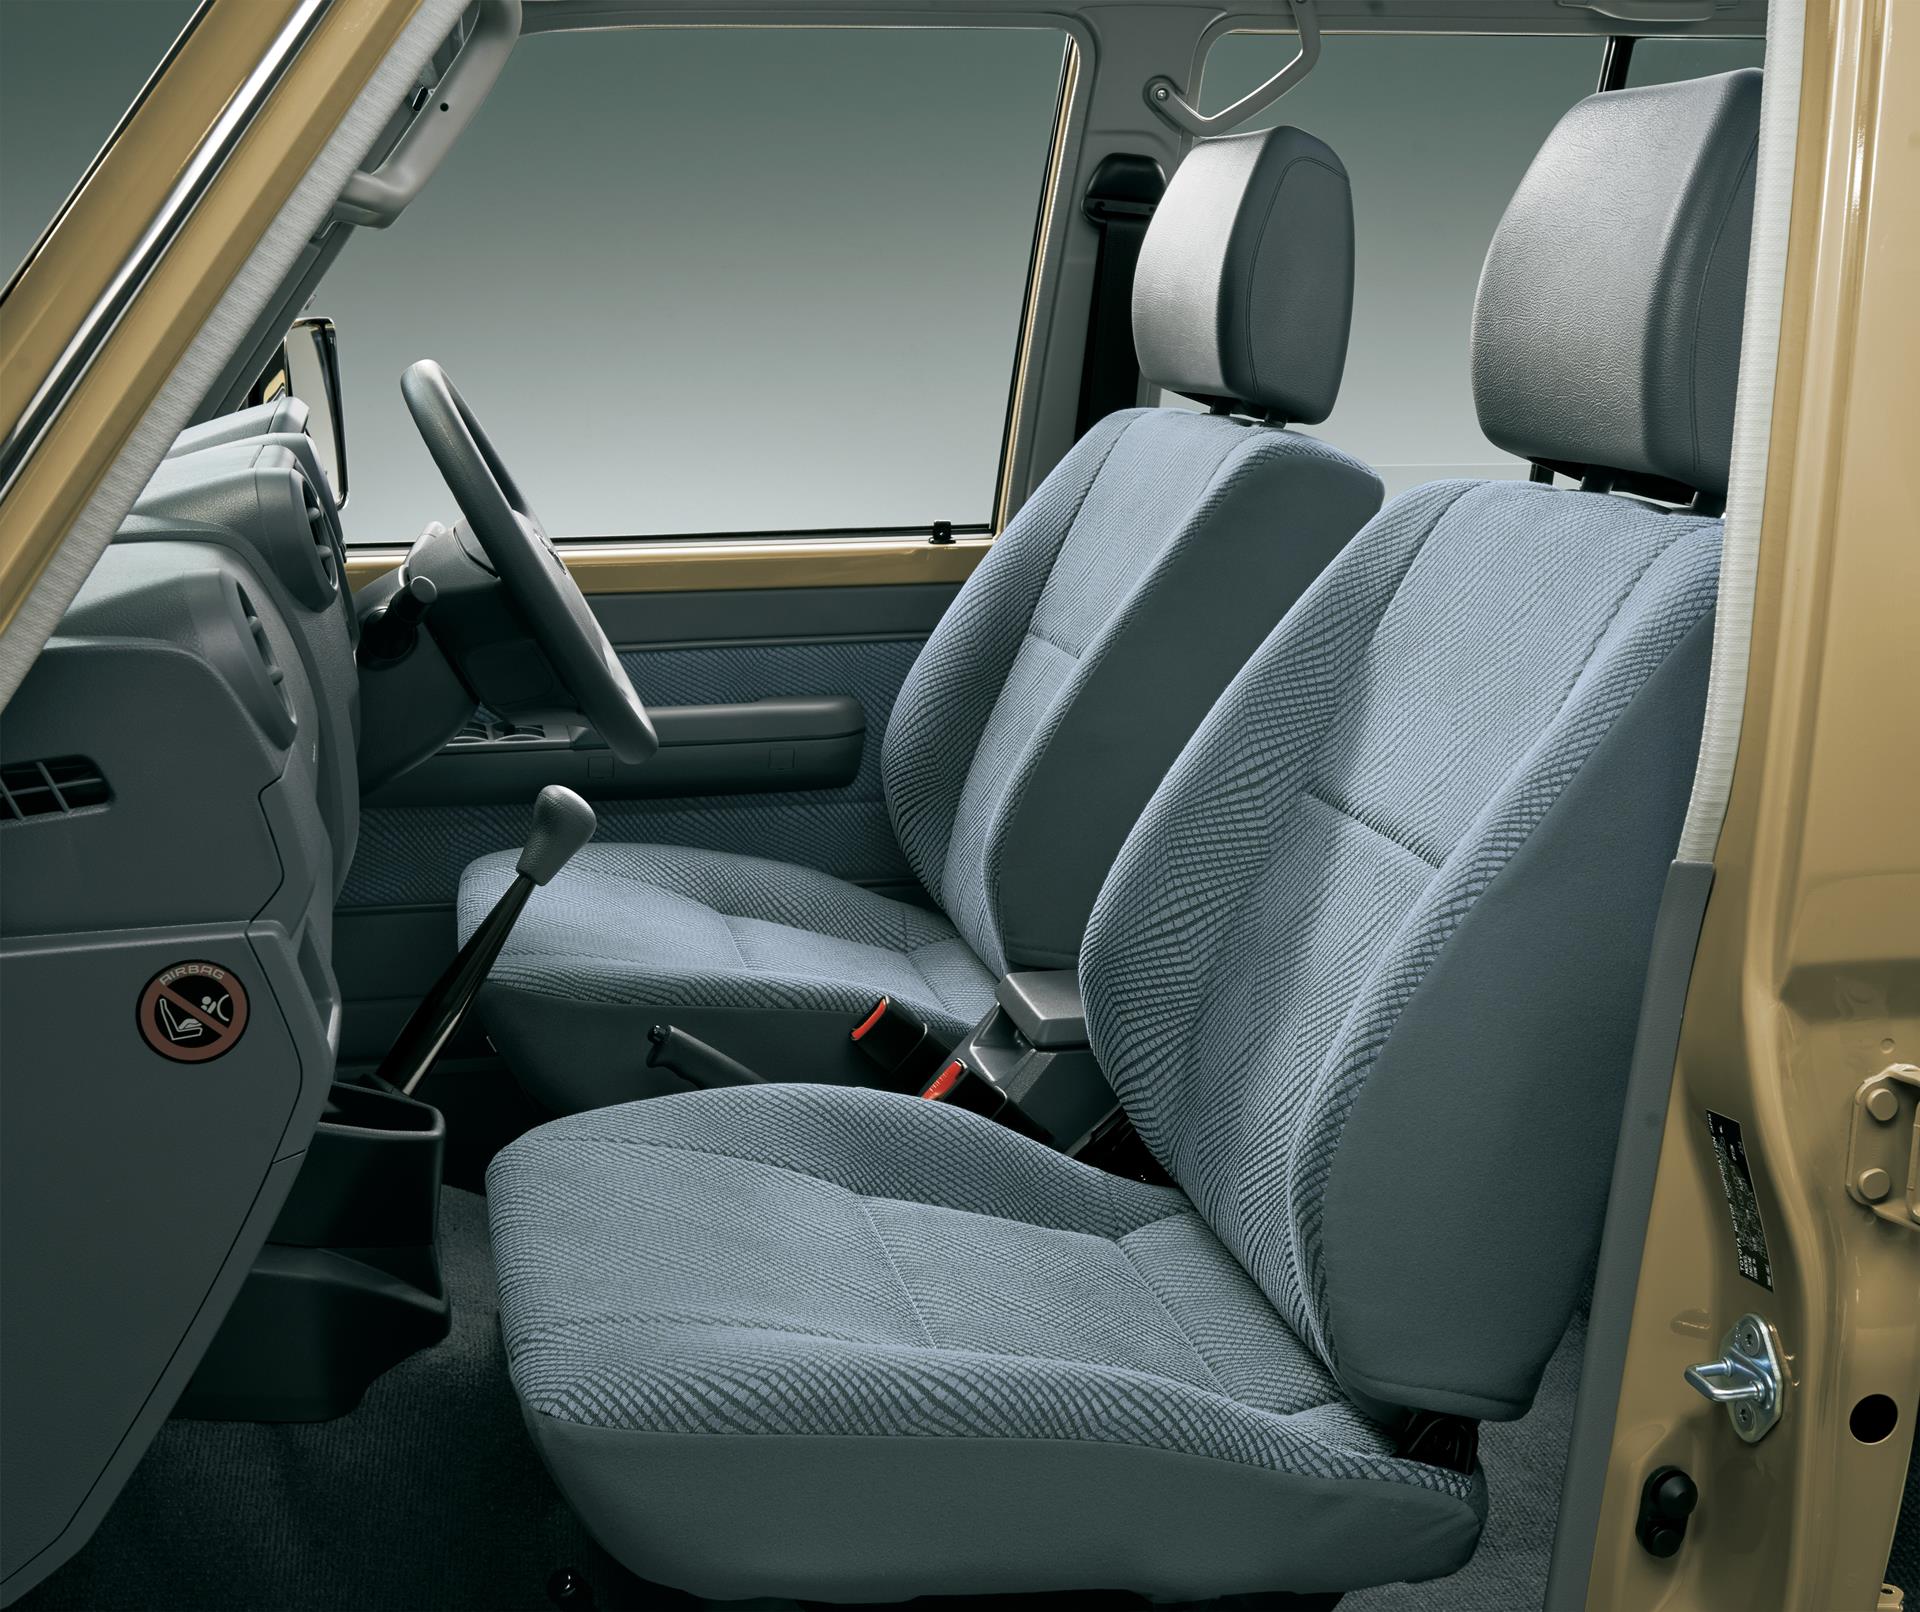 Land Cruiser 70 van interior (Japan commemorative re-release; with options)